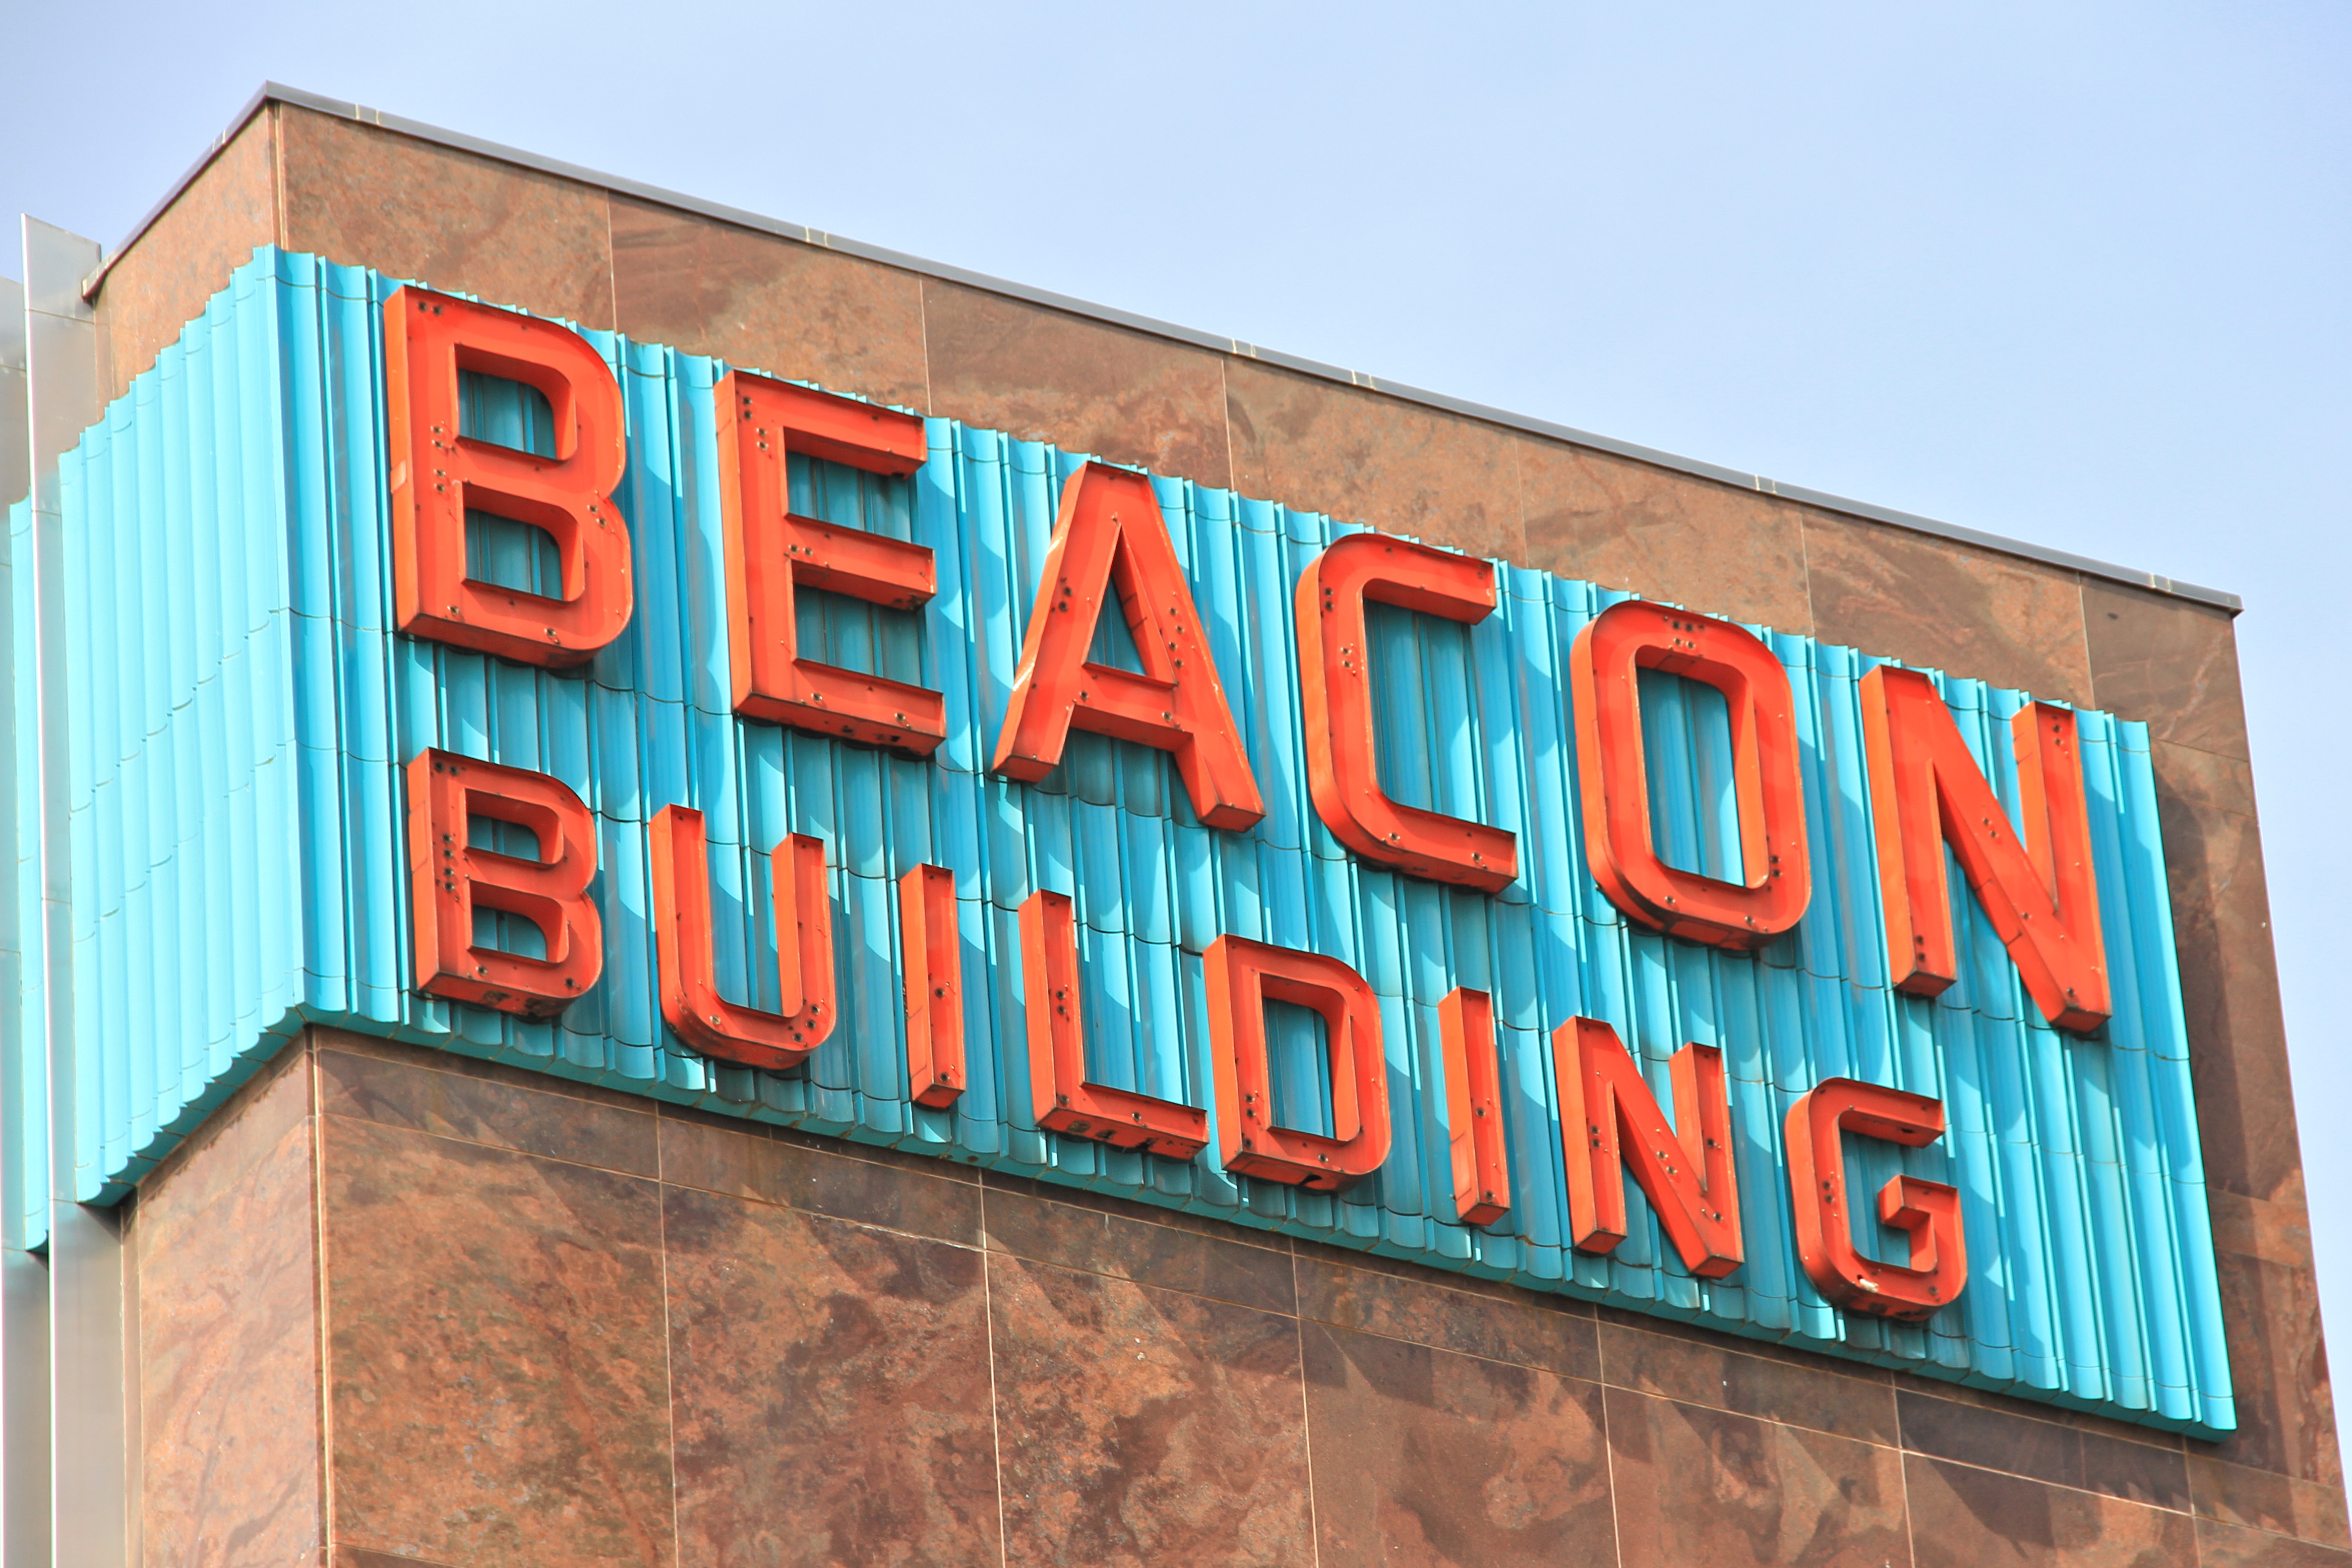 beacon building spring in columbus | girl about columbus